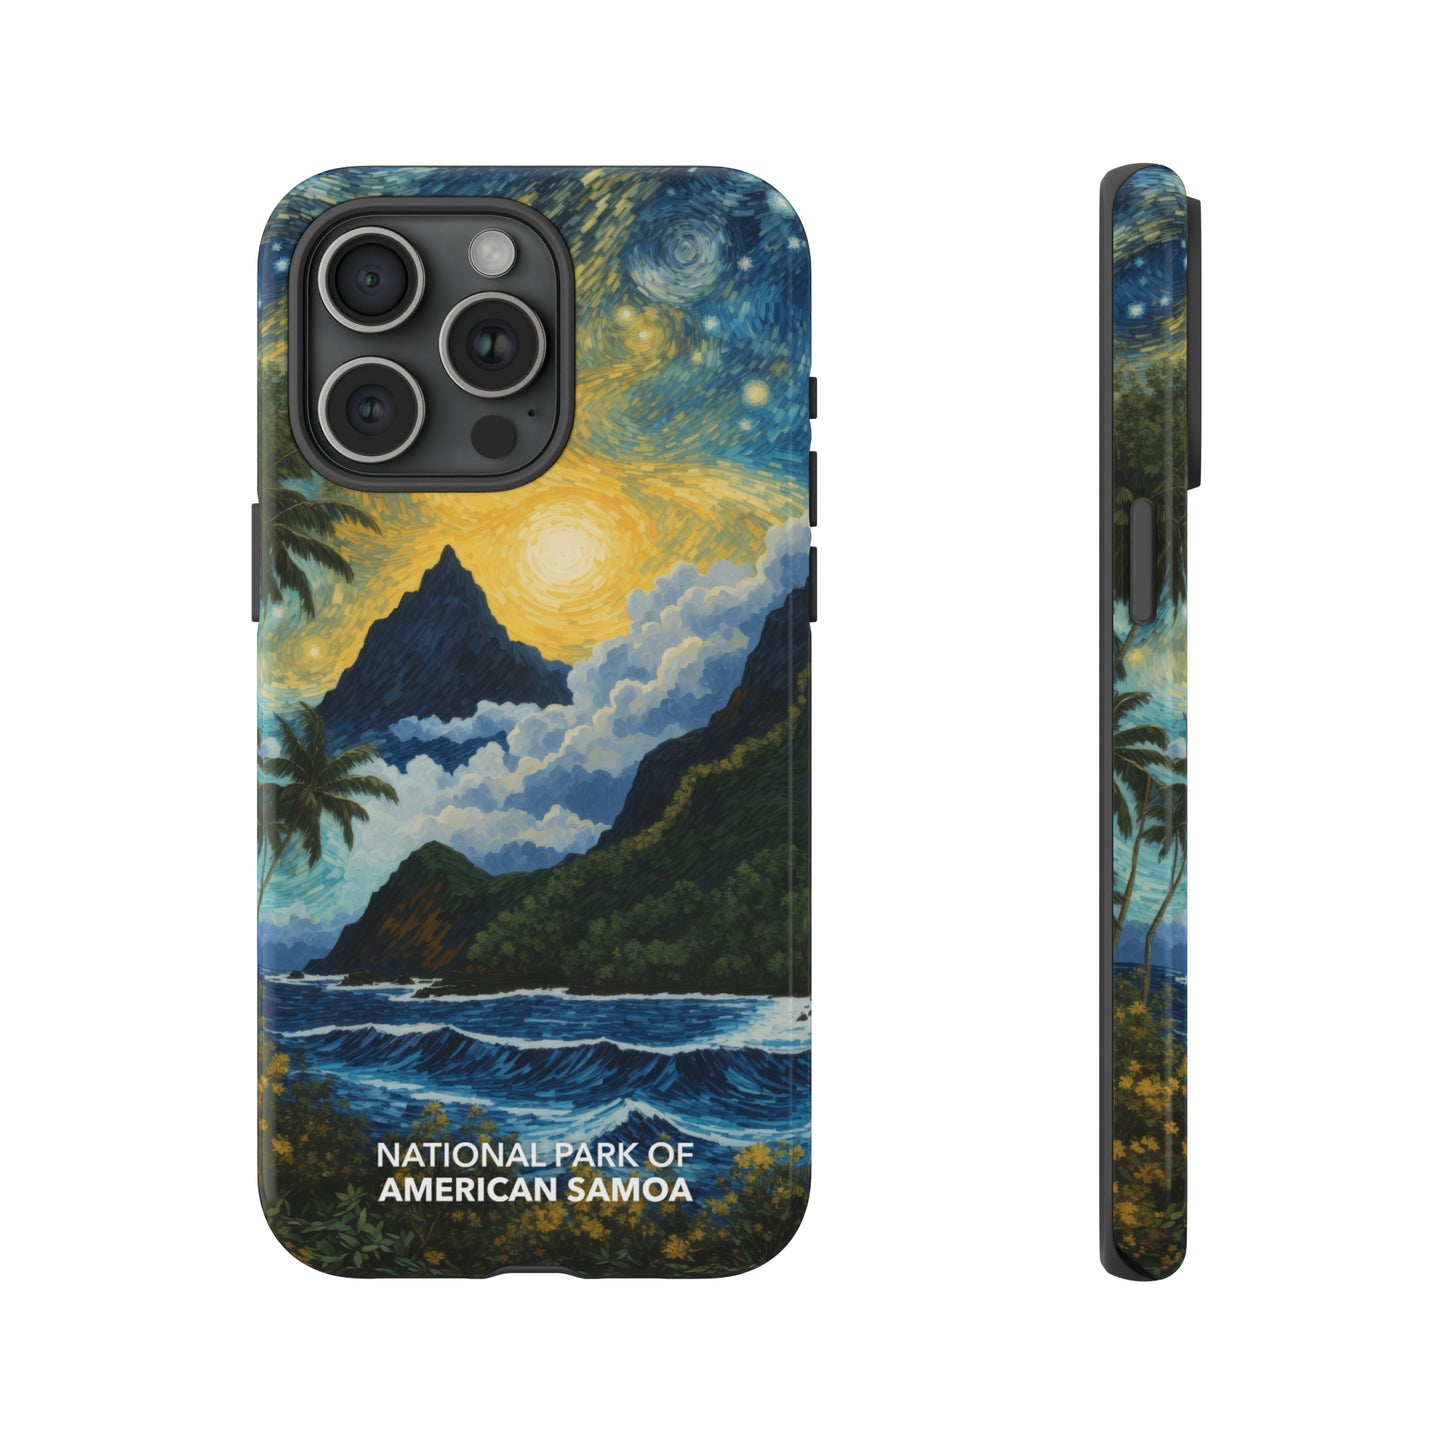 National Park of American Samoa Phone Case - Starry Night